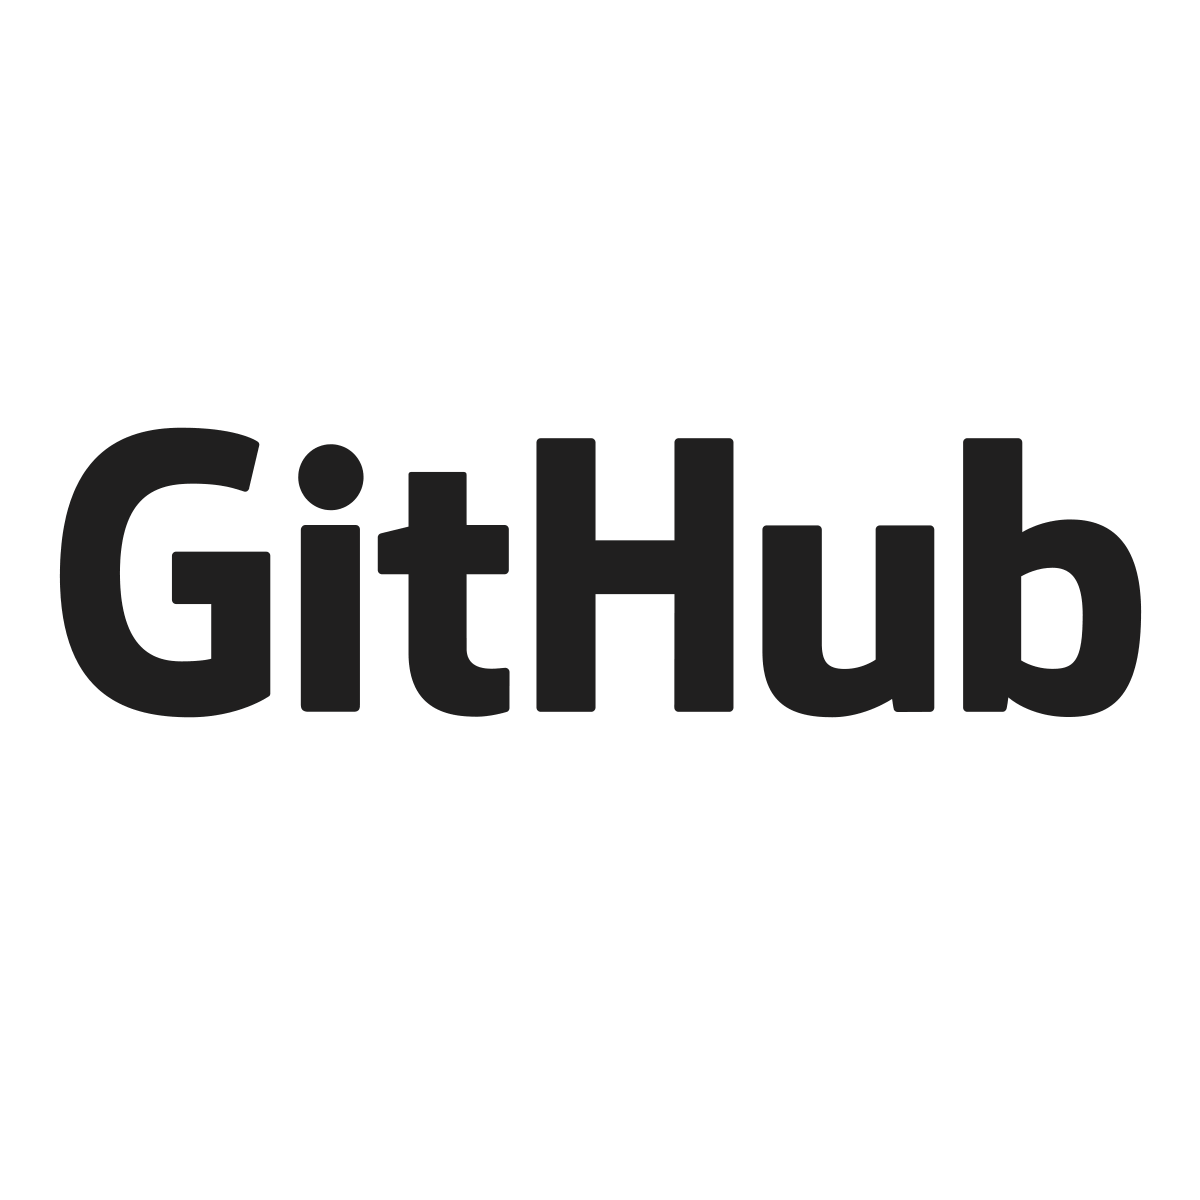 A parody on the GitHub logo, 